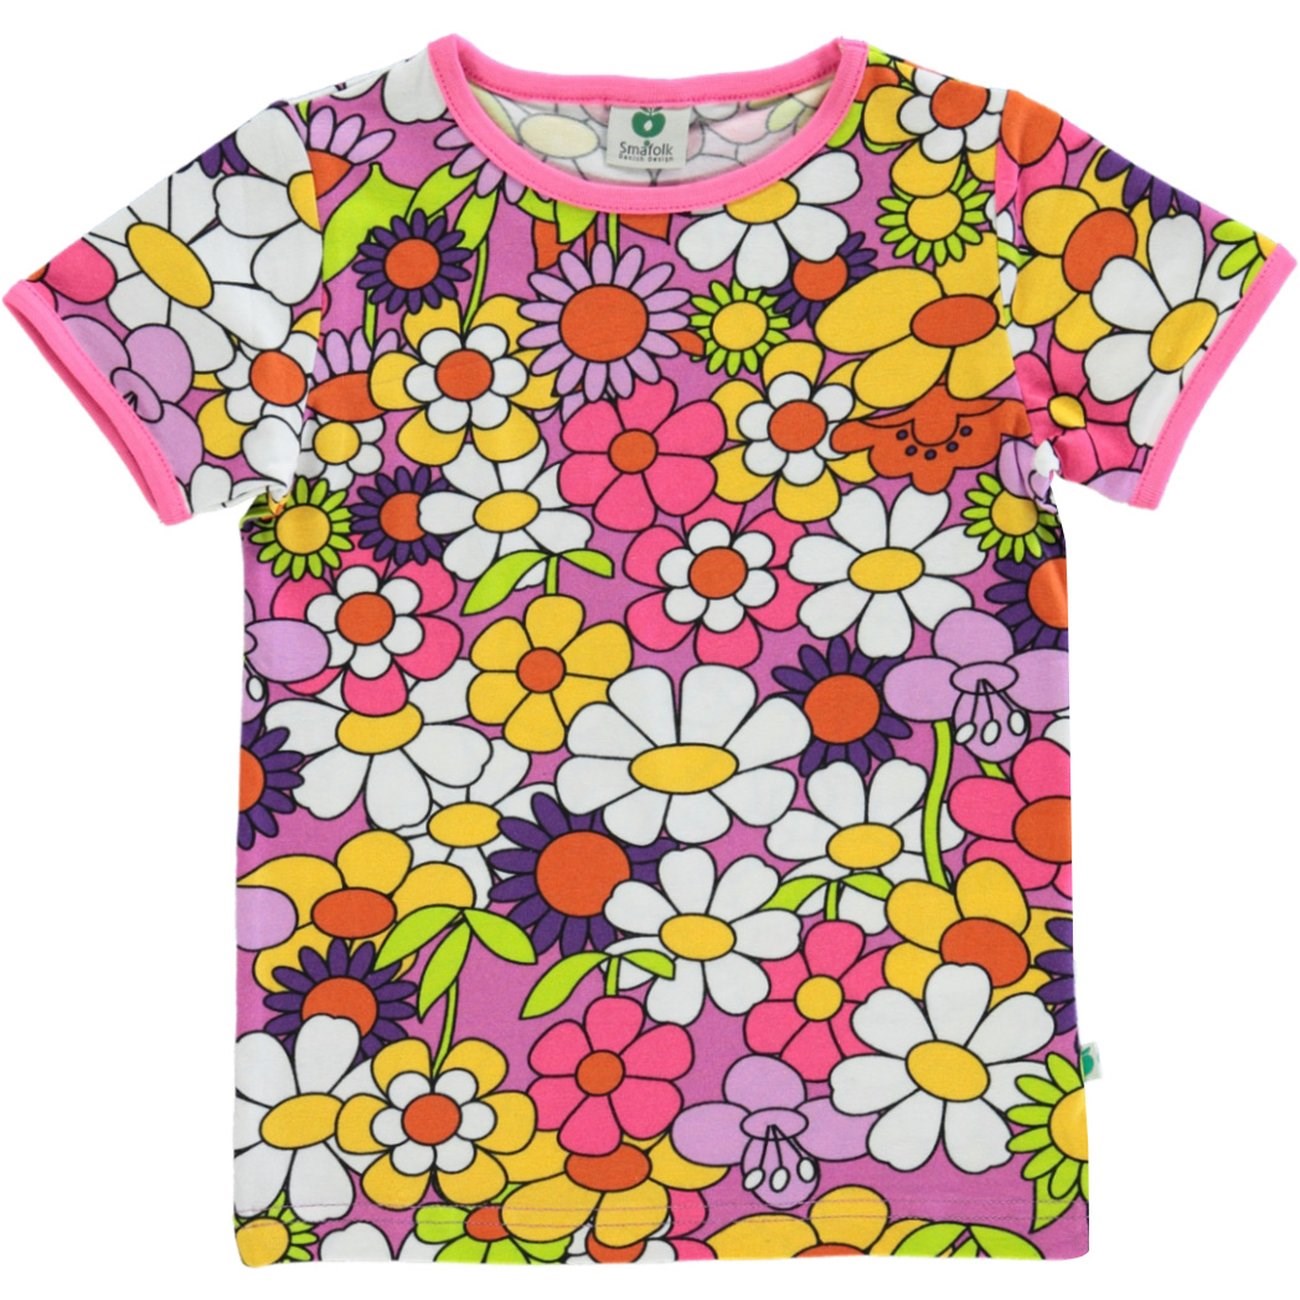 Småfolk Spring Pink T-Shirt With Flowers